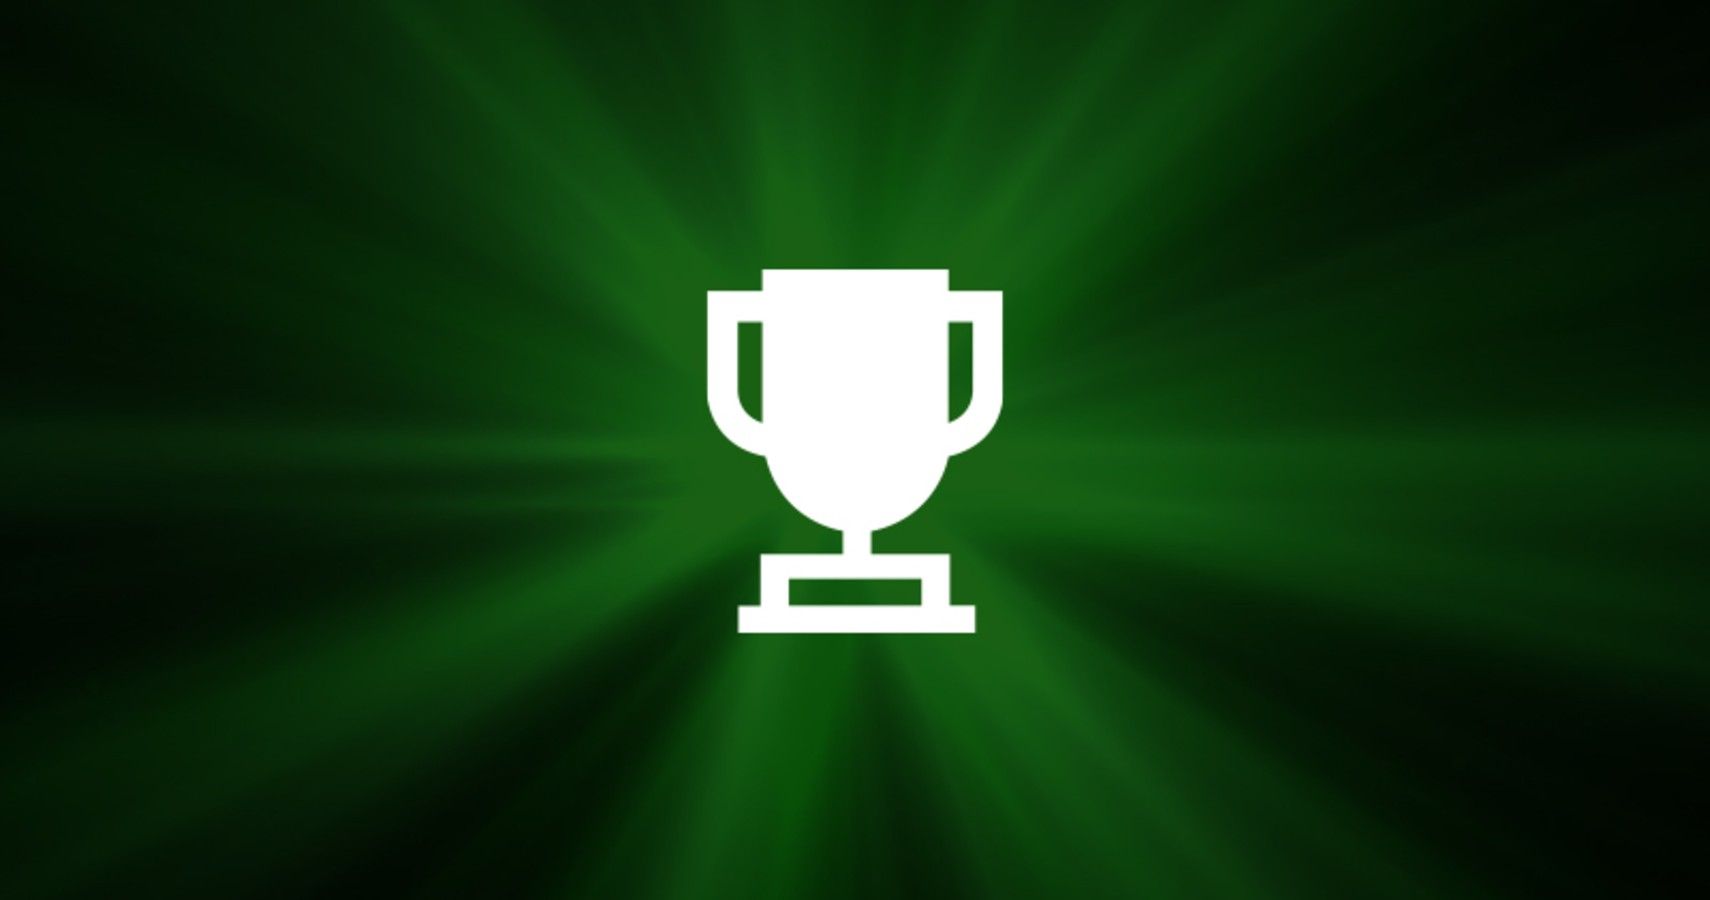 Achievement Icon Over Green Background